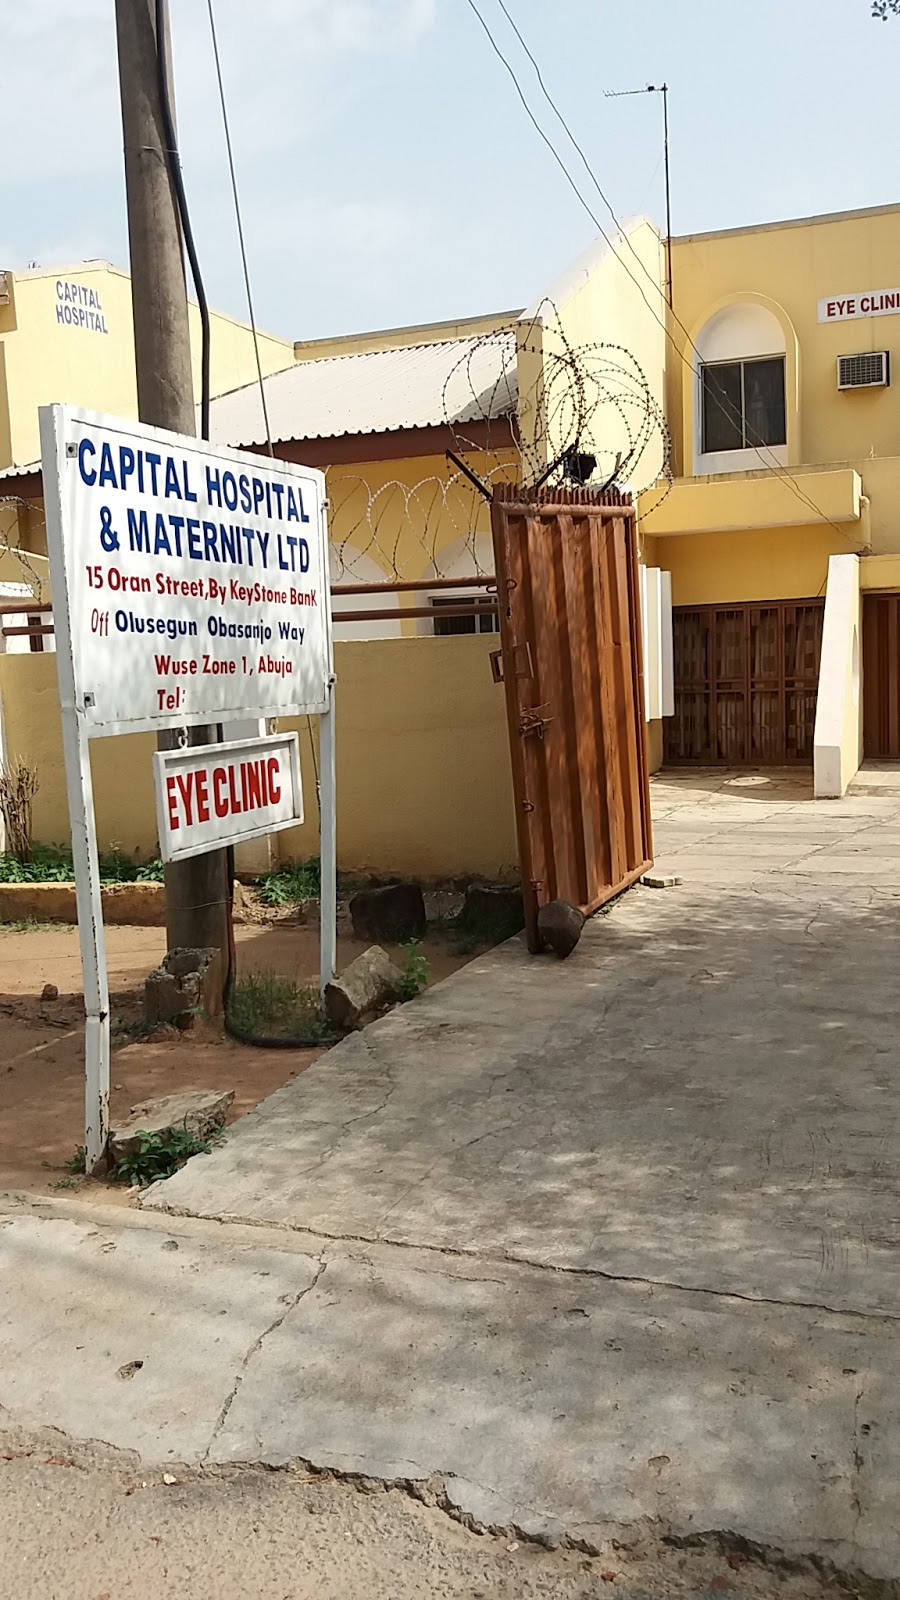 Capital Hospital & Maternity Ltd